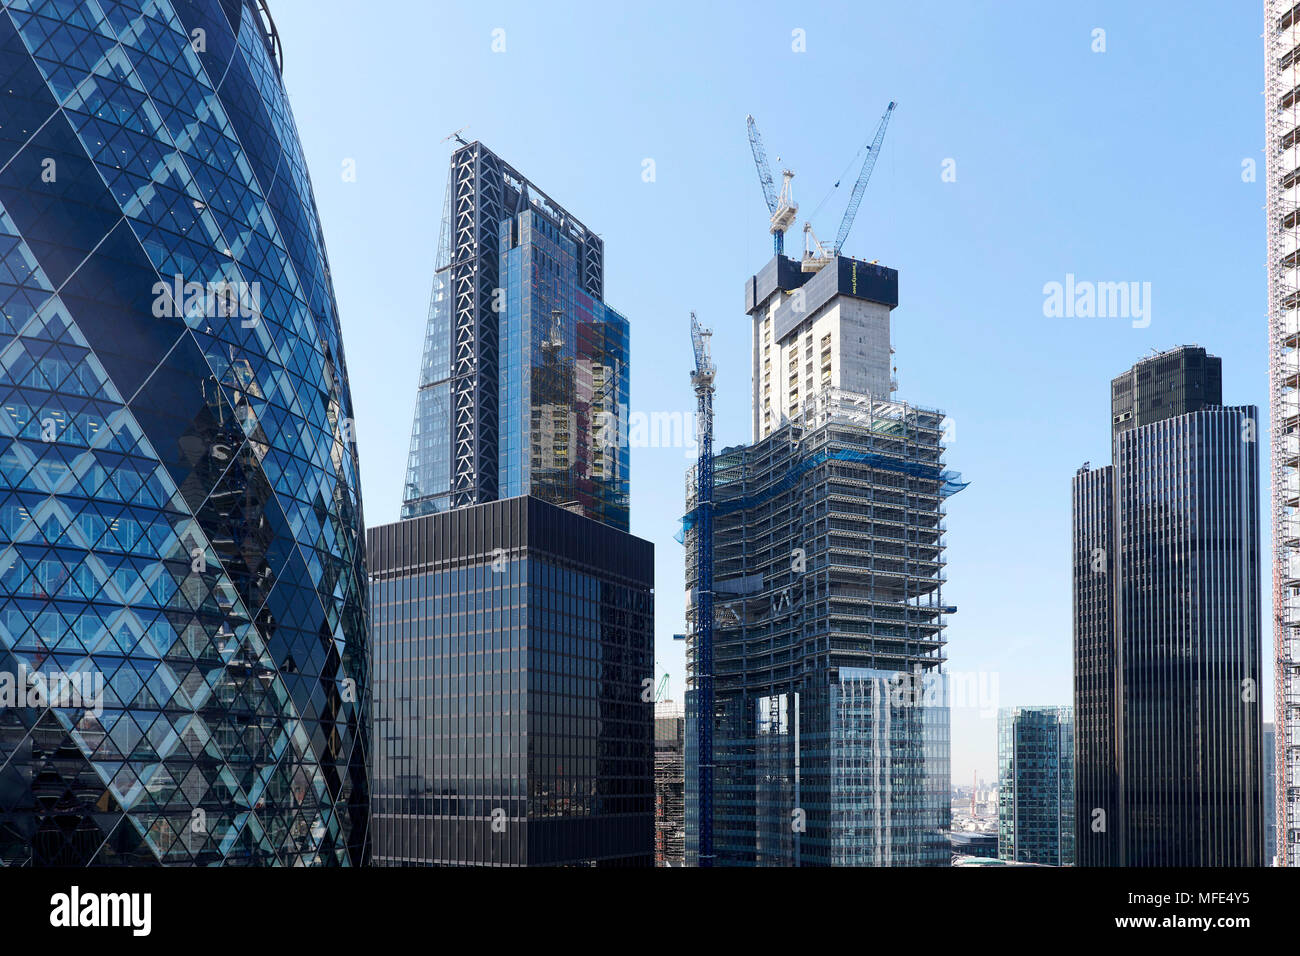 Construction work, City of London Financial Centre, UK Stock Photo